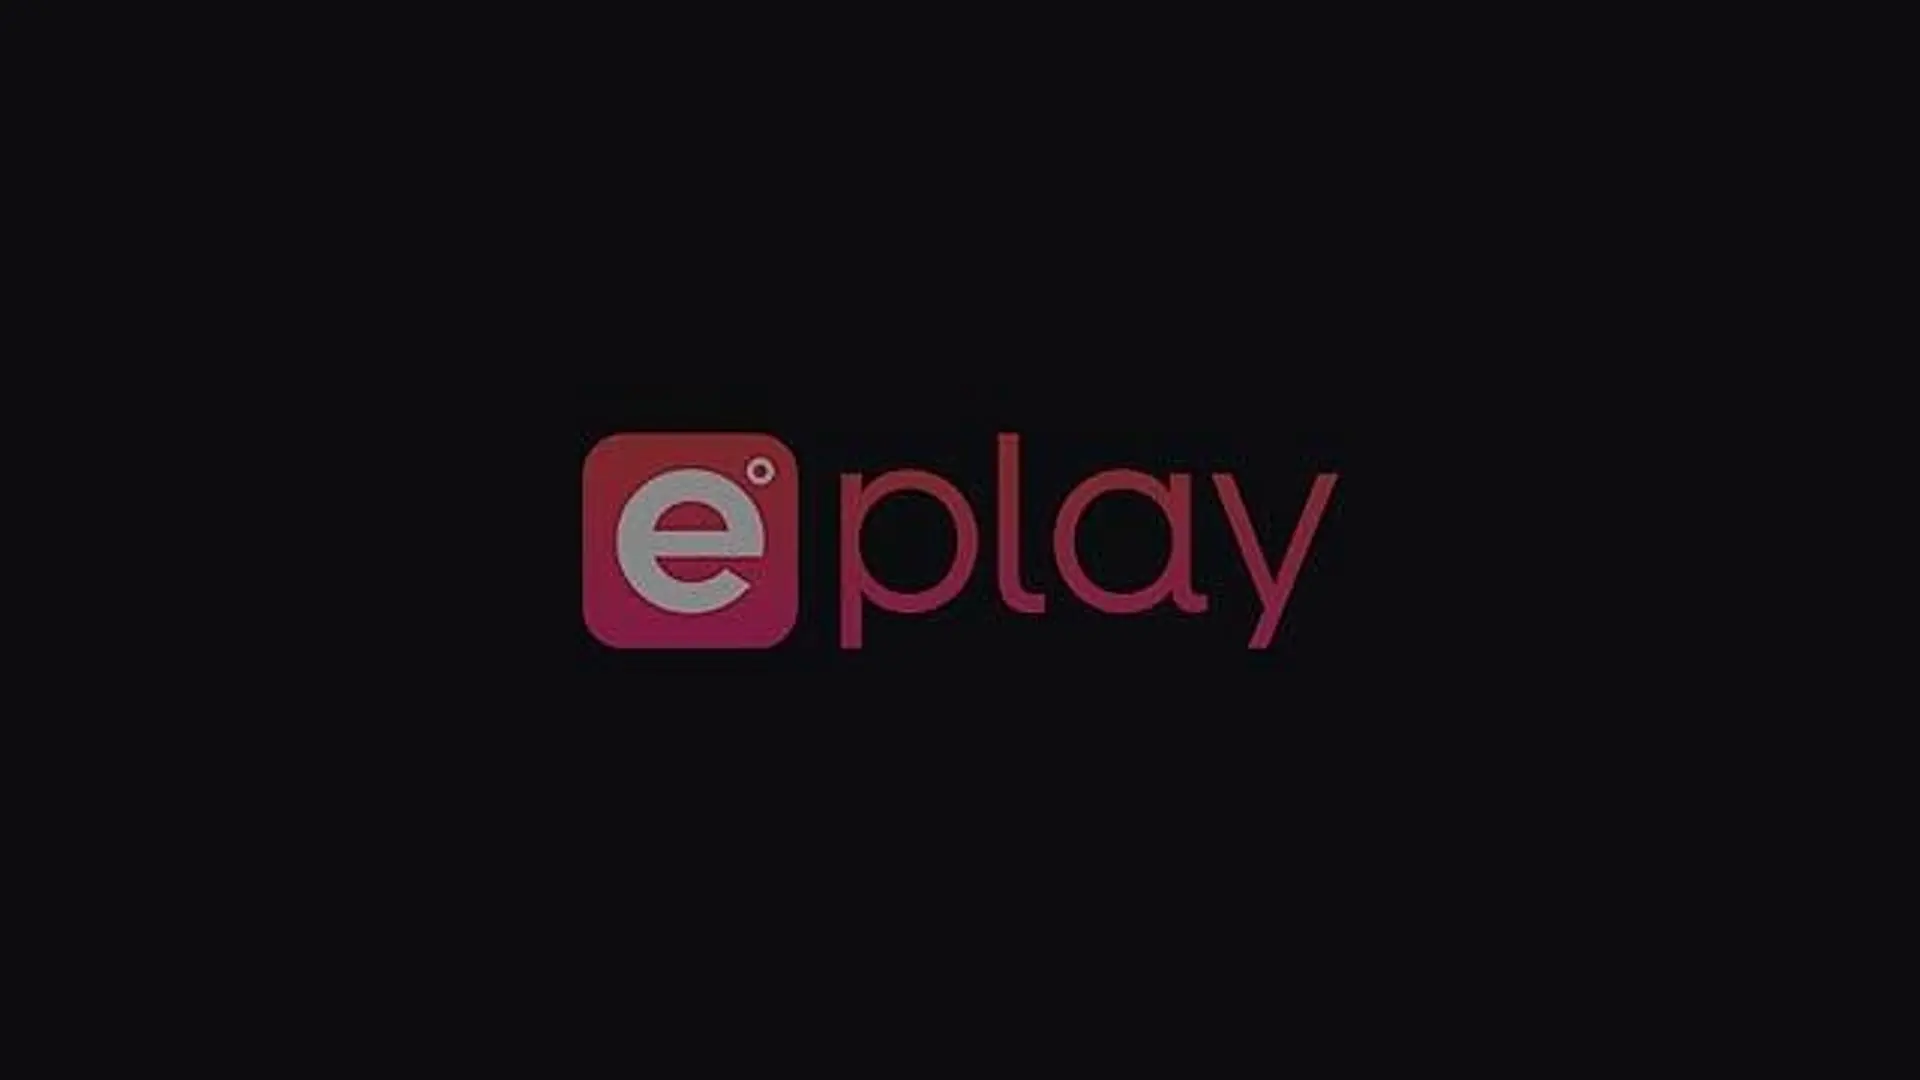 heySiry's ePlay Channel